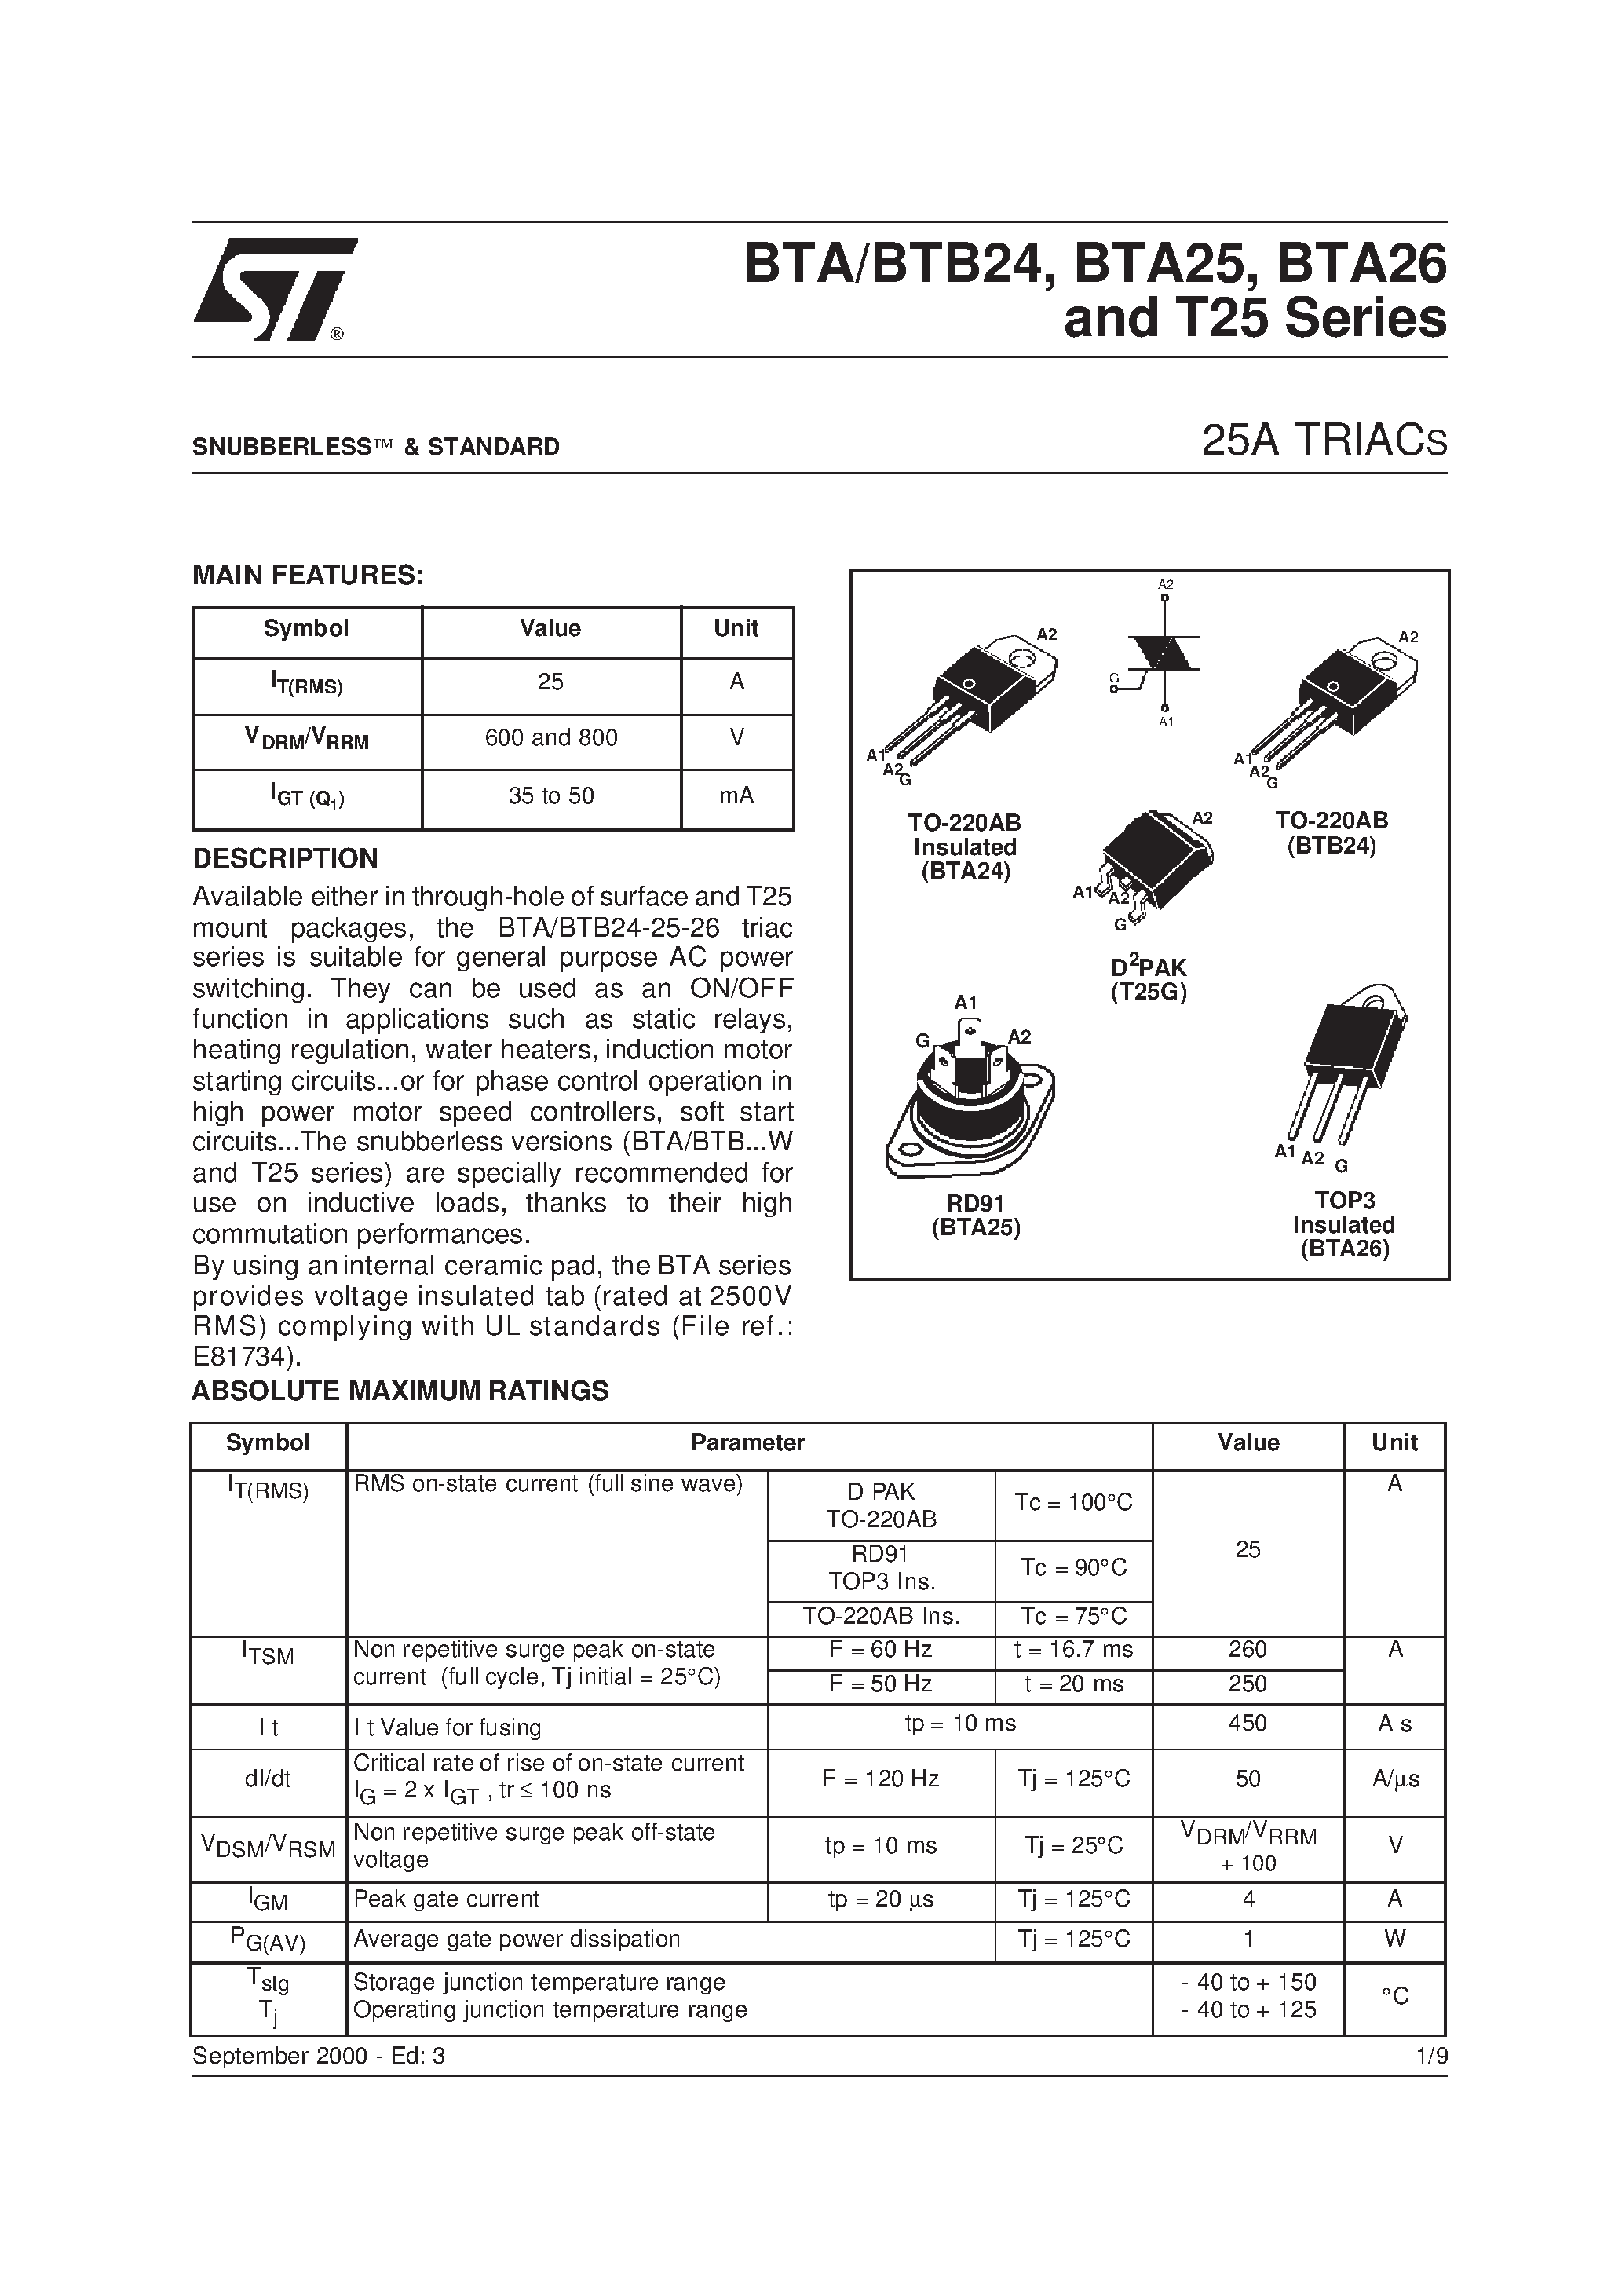 Datasheet BTA26-600CW - 25A TRIACS page 1